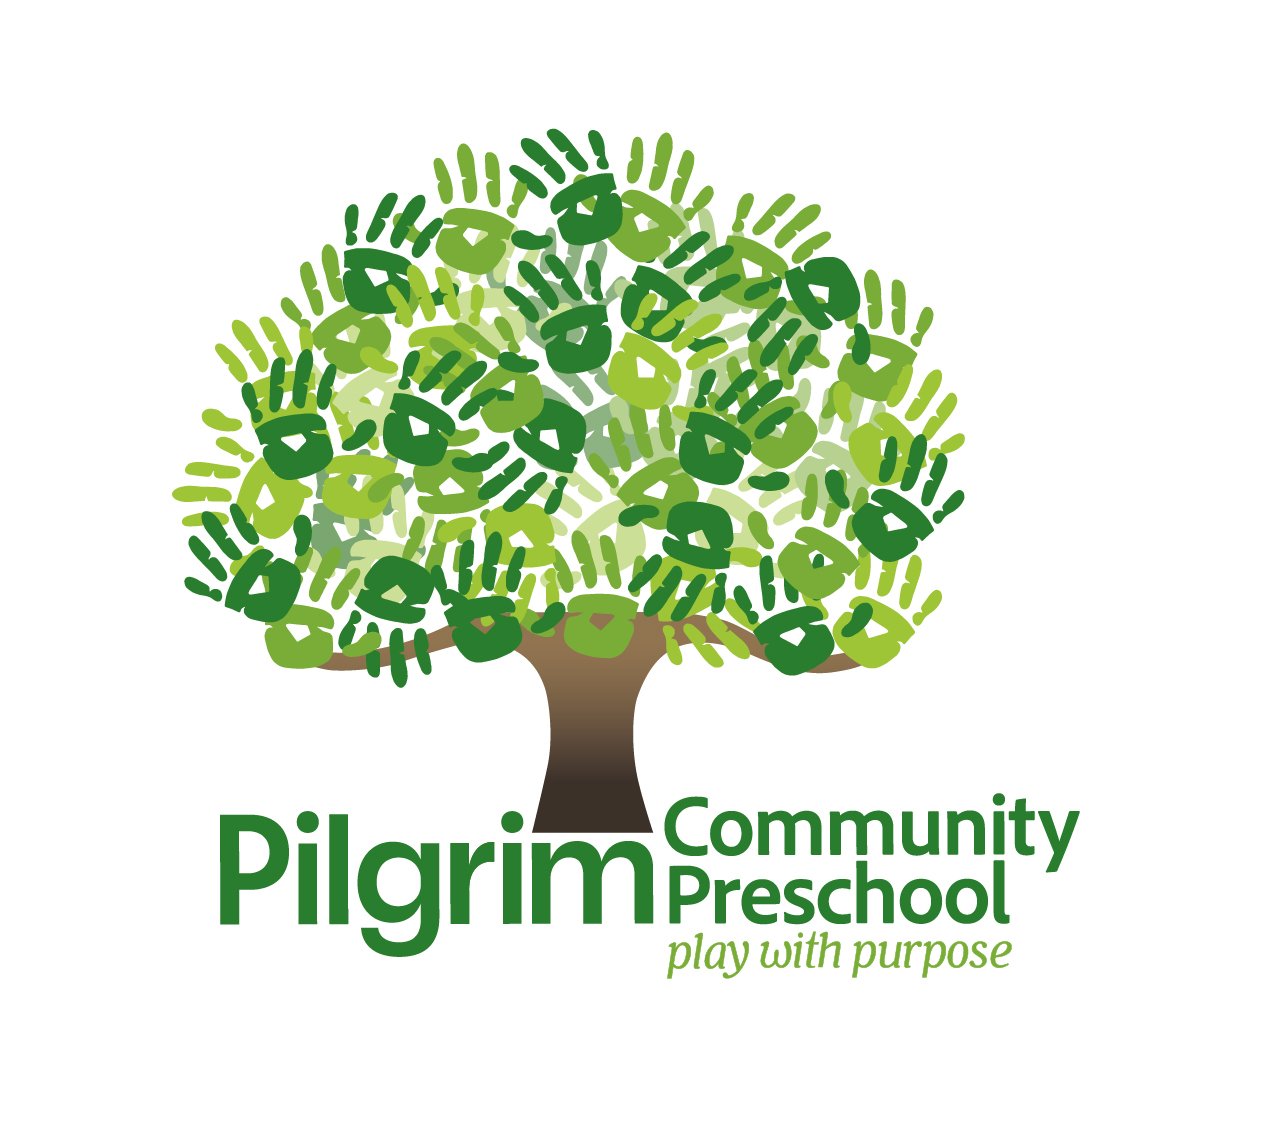 Pilgrim: A Community Preschool